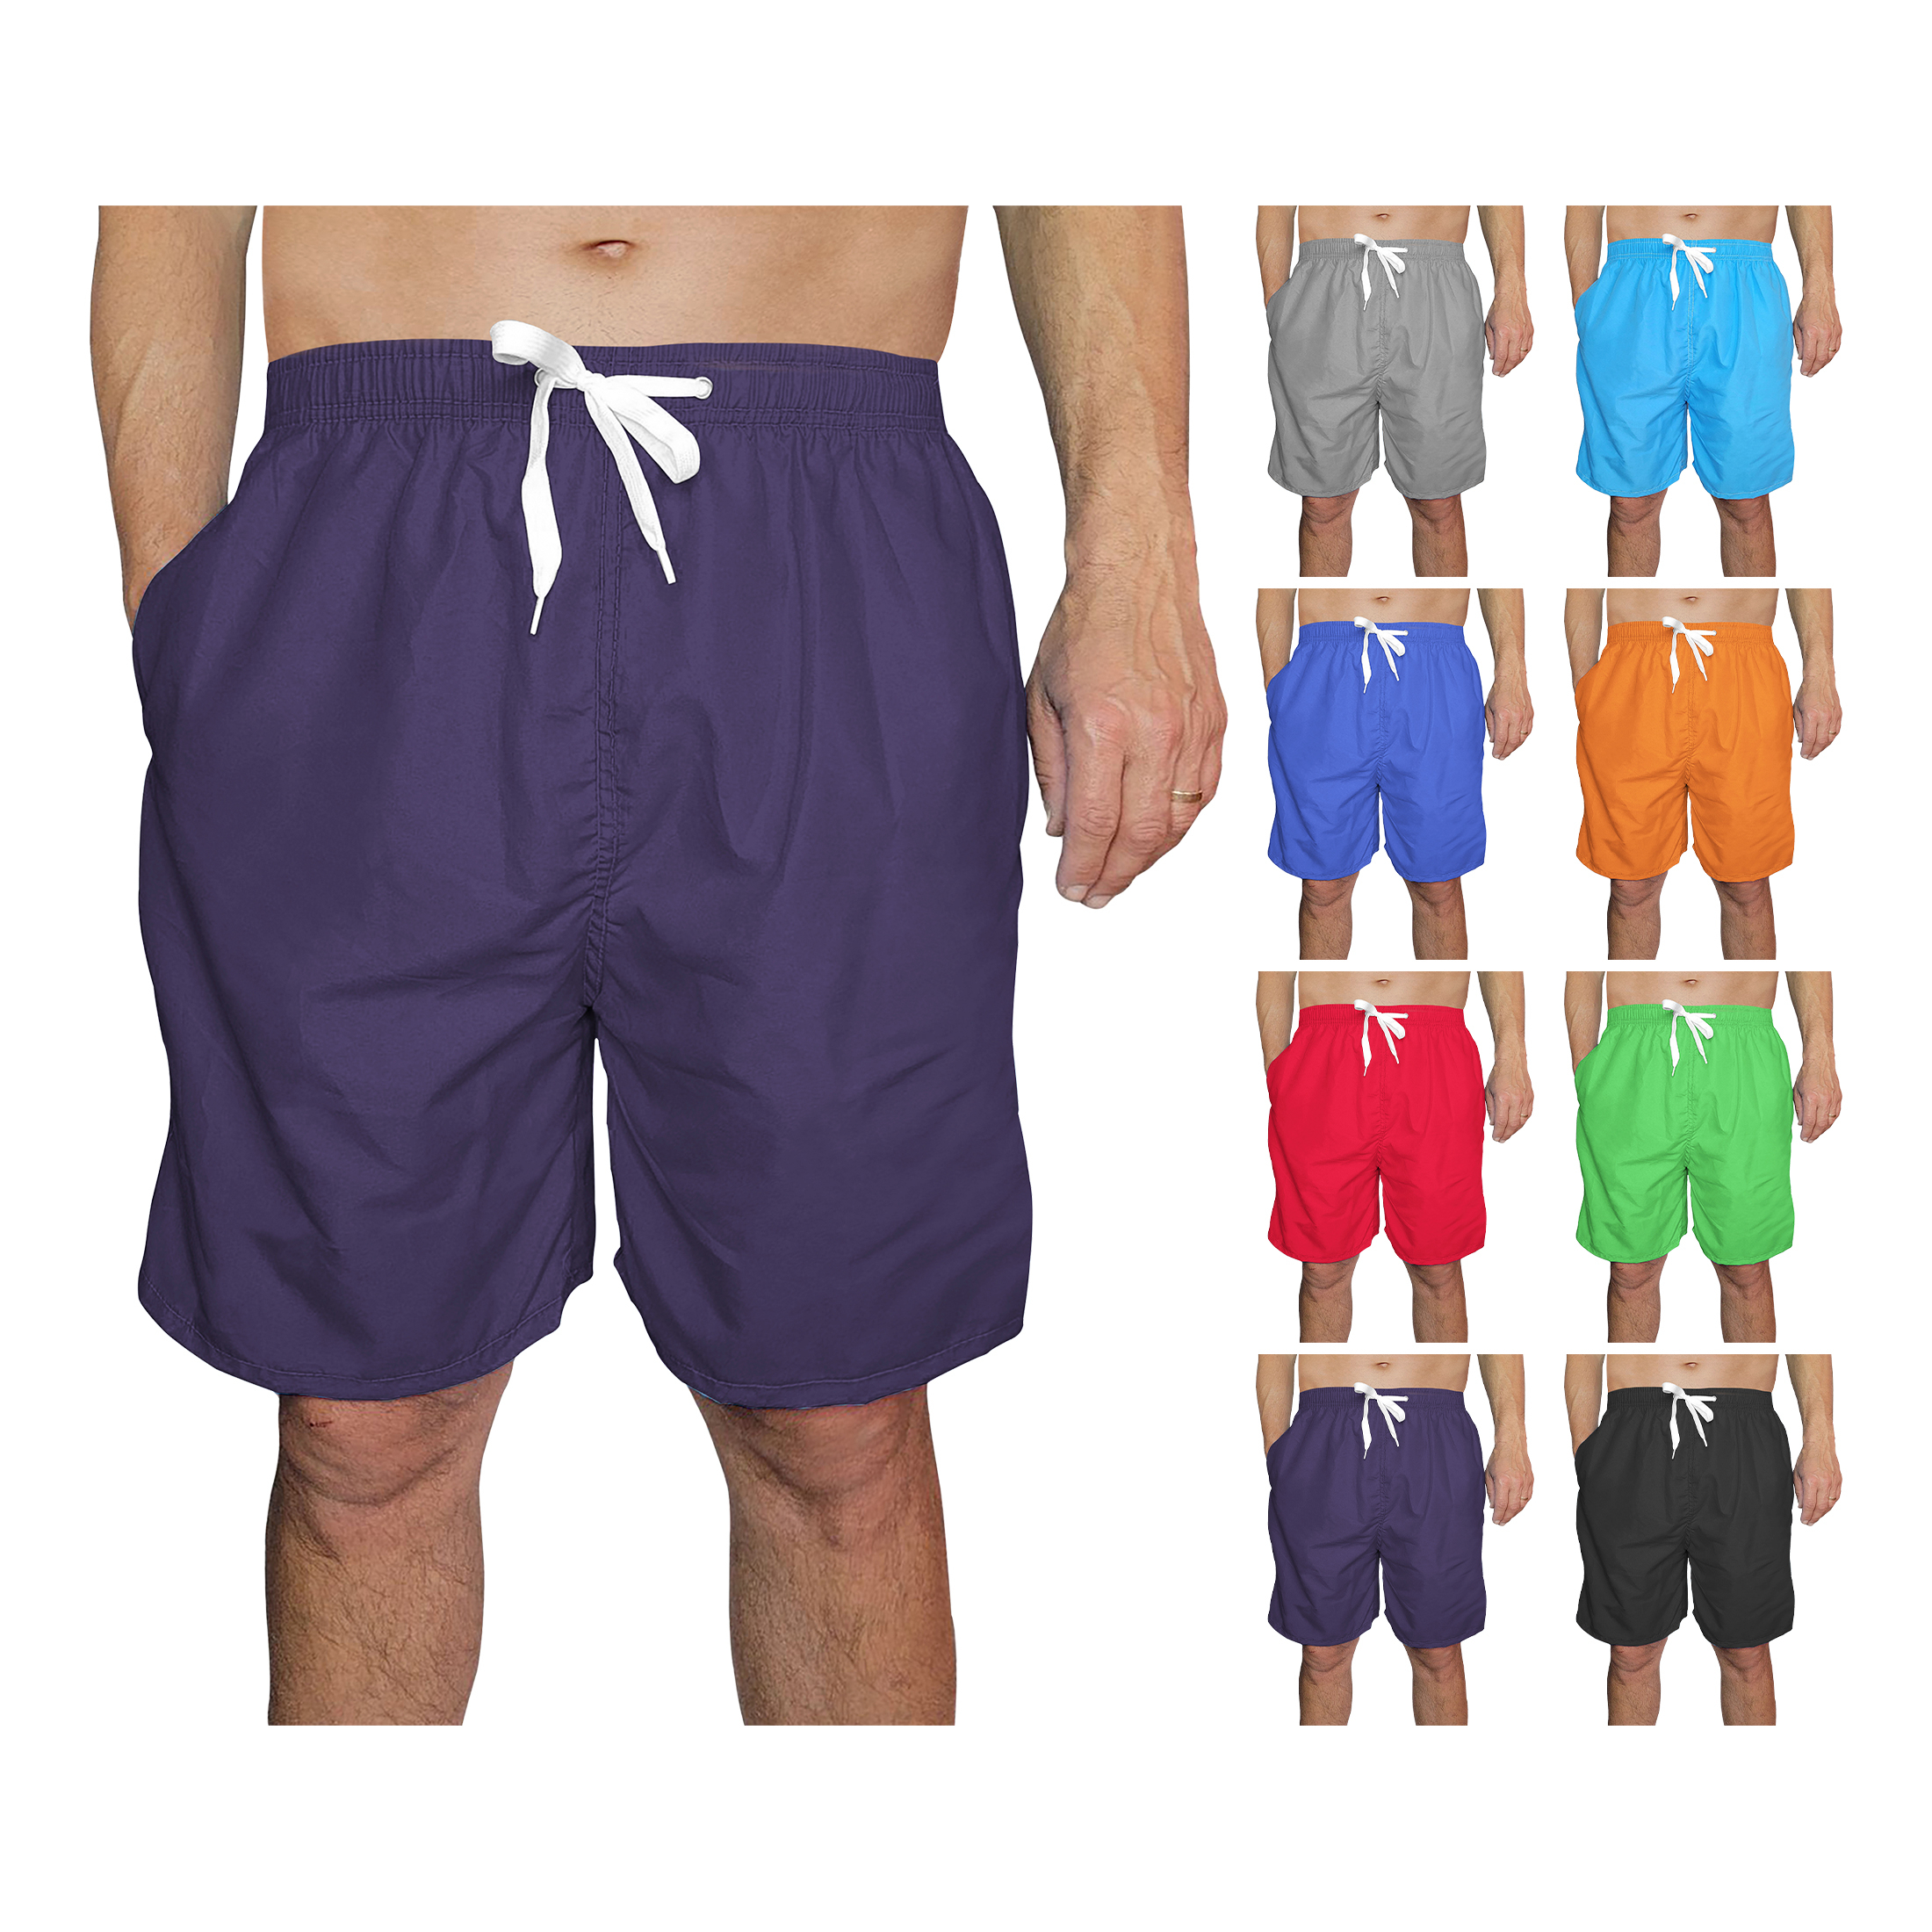 5-Pack Men's Quick Dry Swim Trunks With Pockets Solid Bathing Beachwear Flex Board Shorts - XL